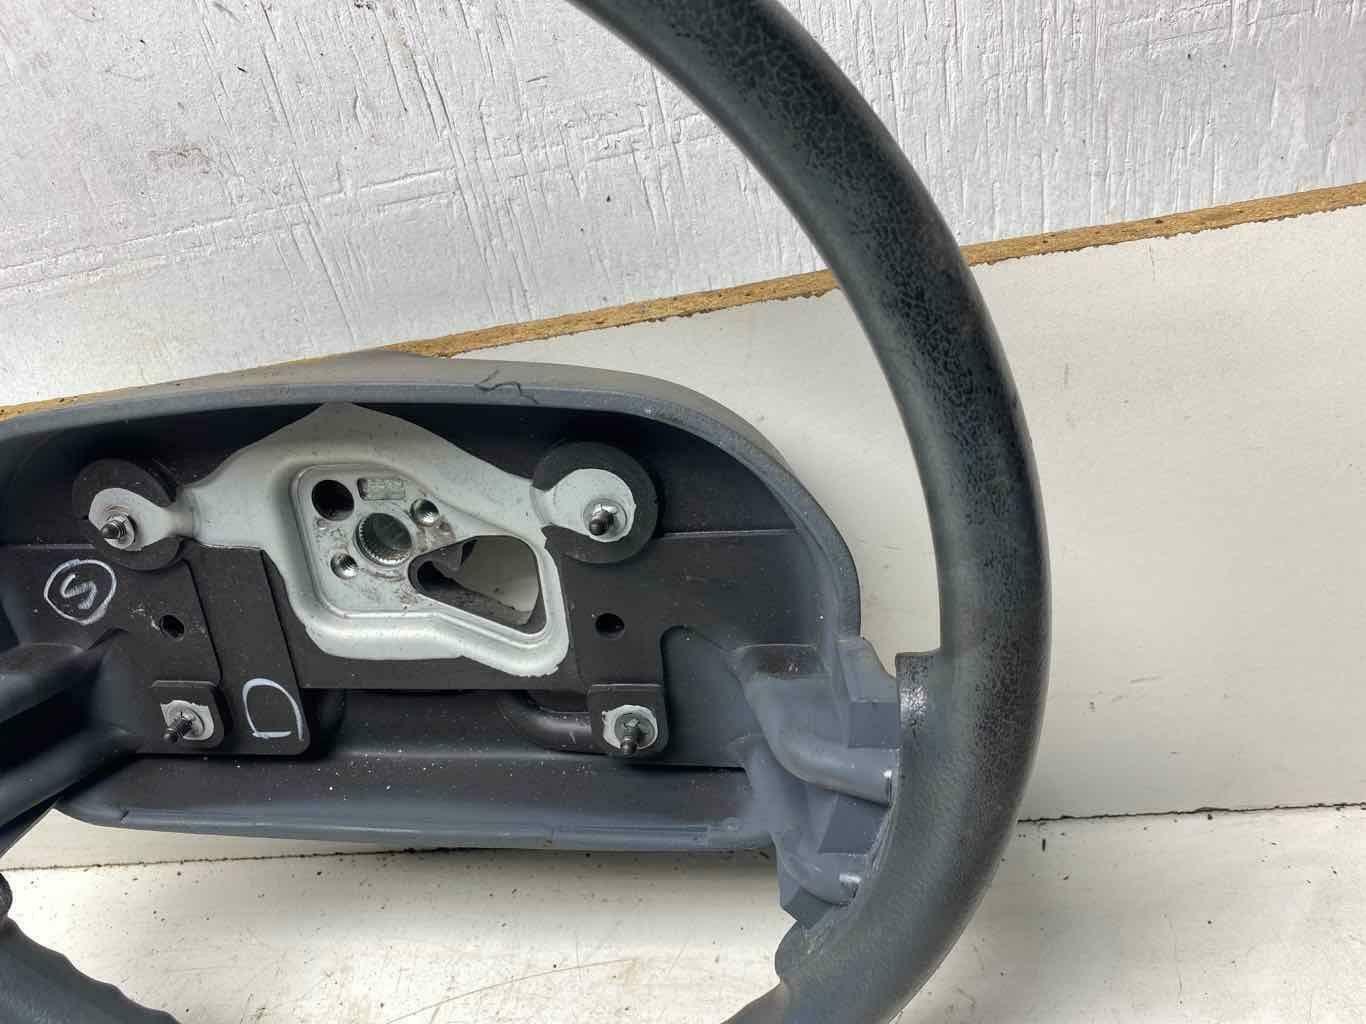 Steering Wheel BUICK PARK AVE 91